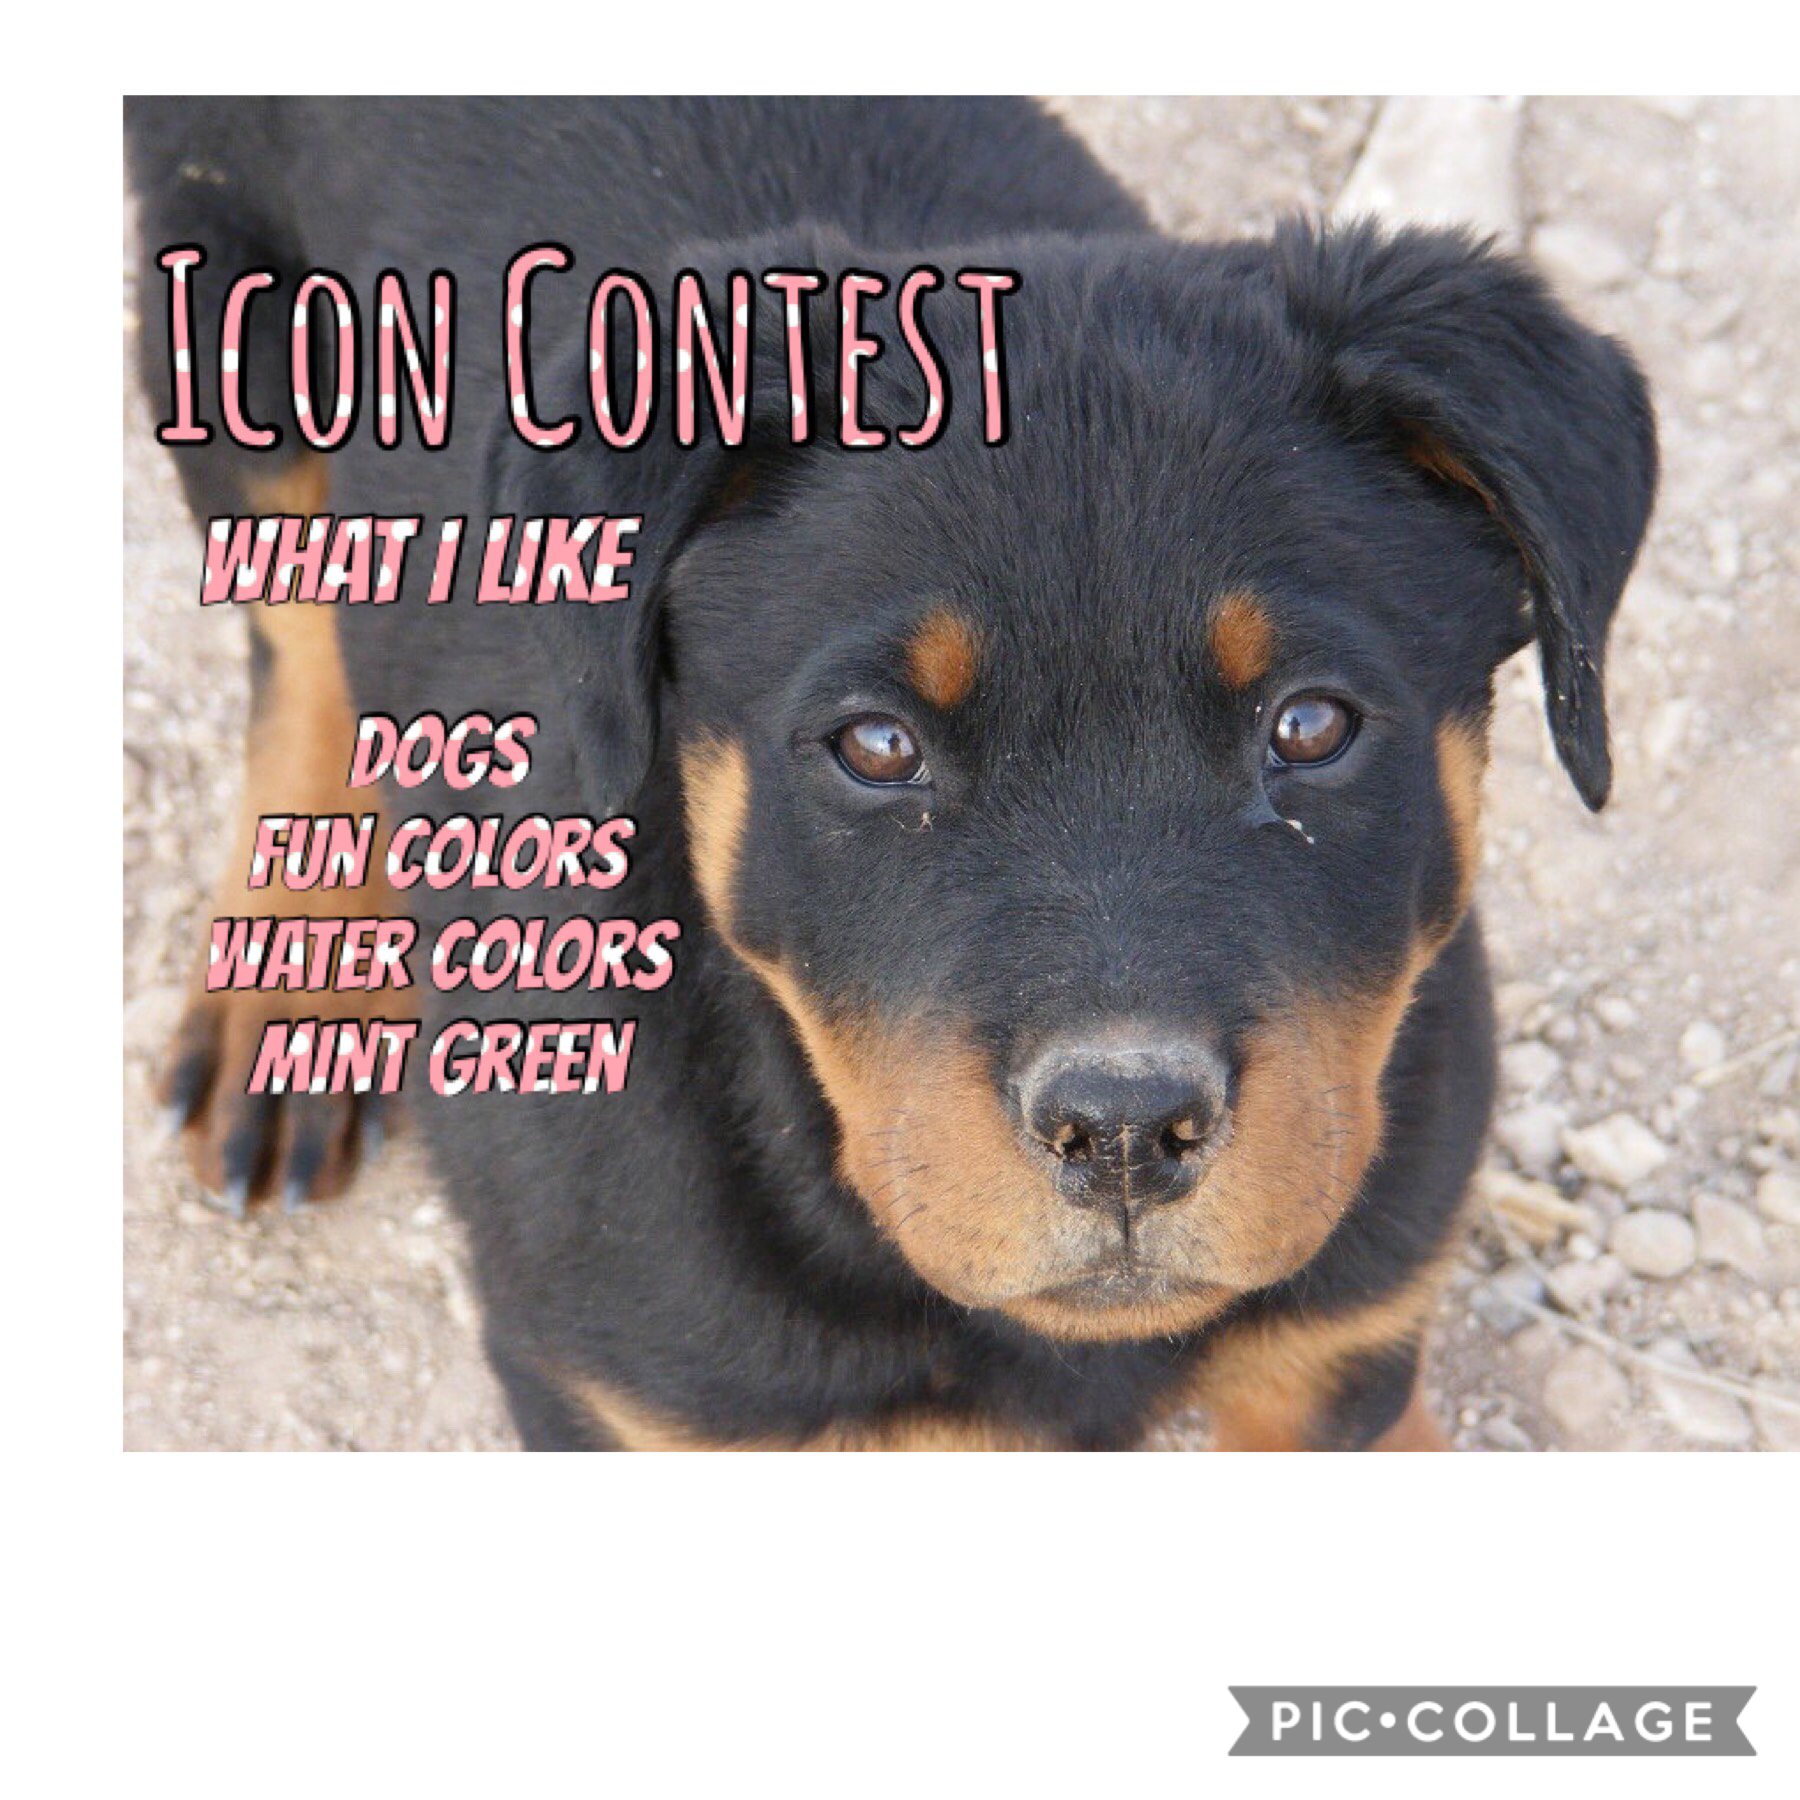 Icon contest 